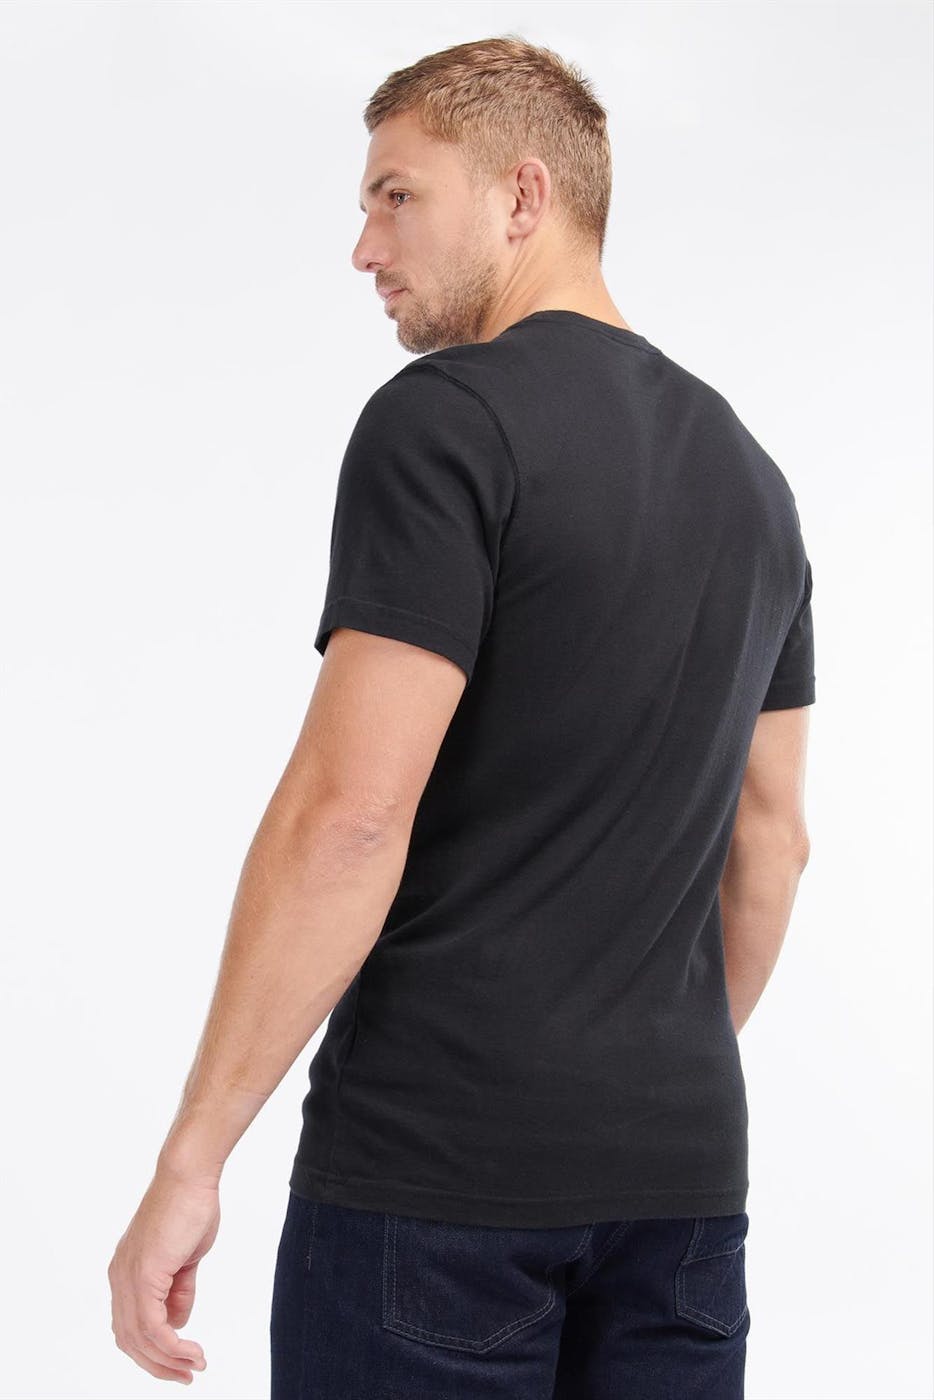 Barbour - Zwarte Cal T-shirt